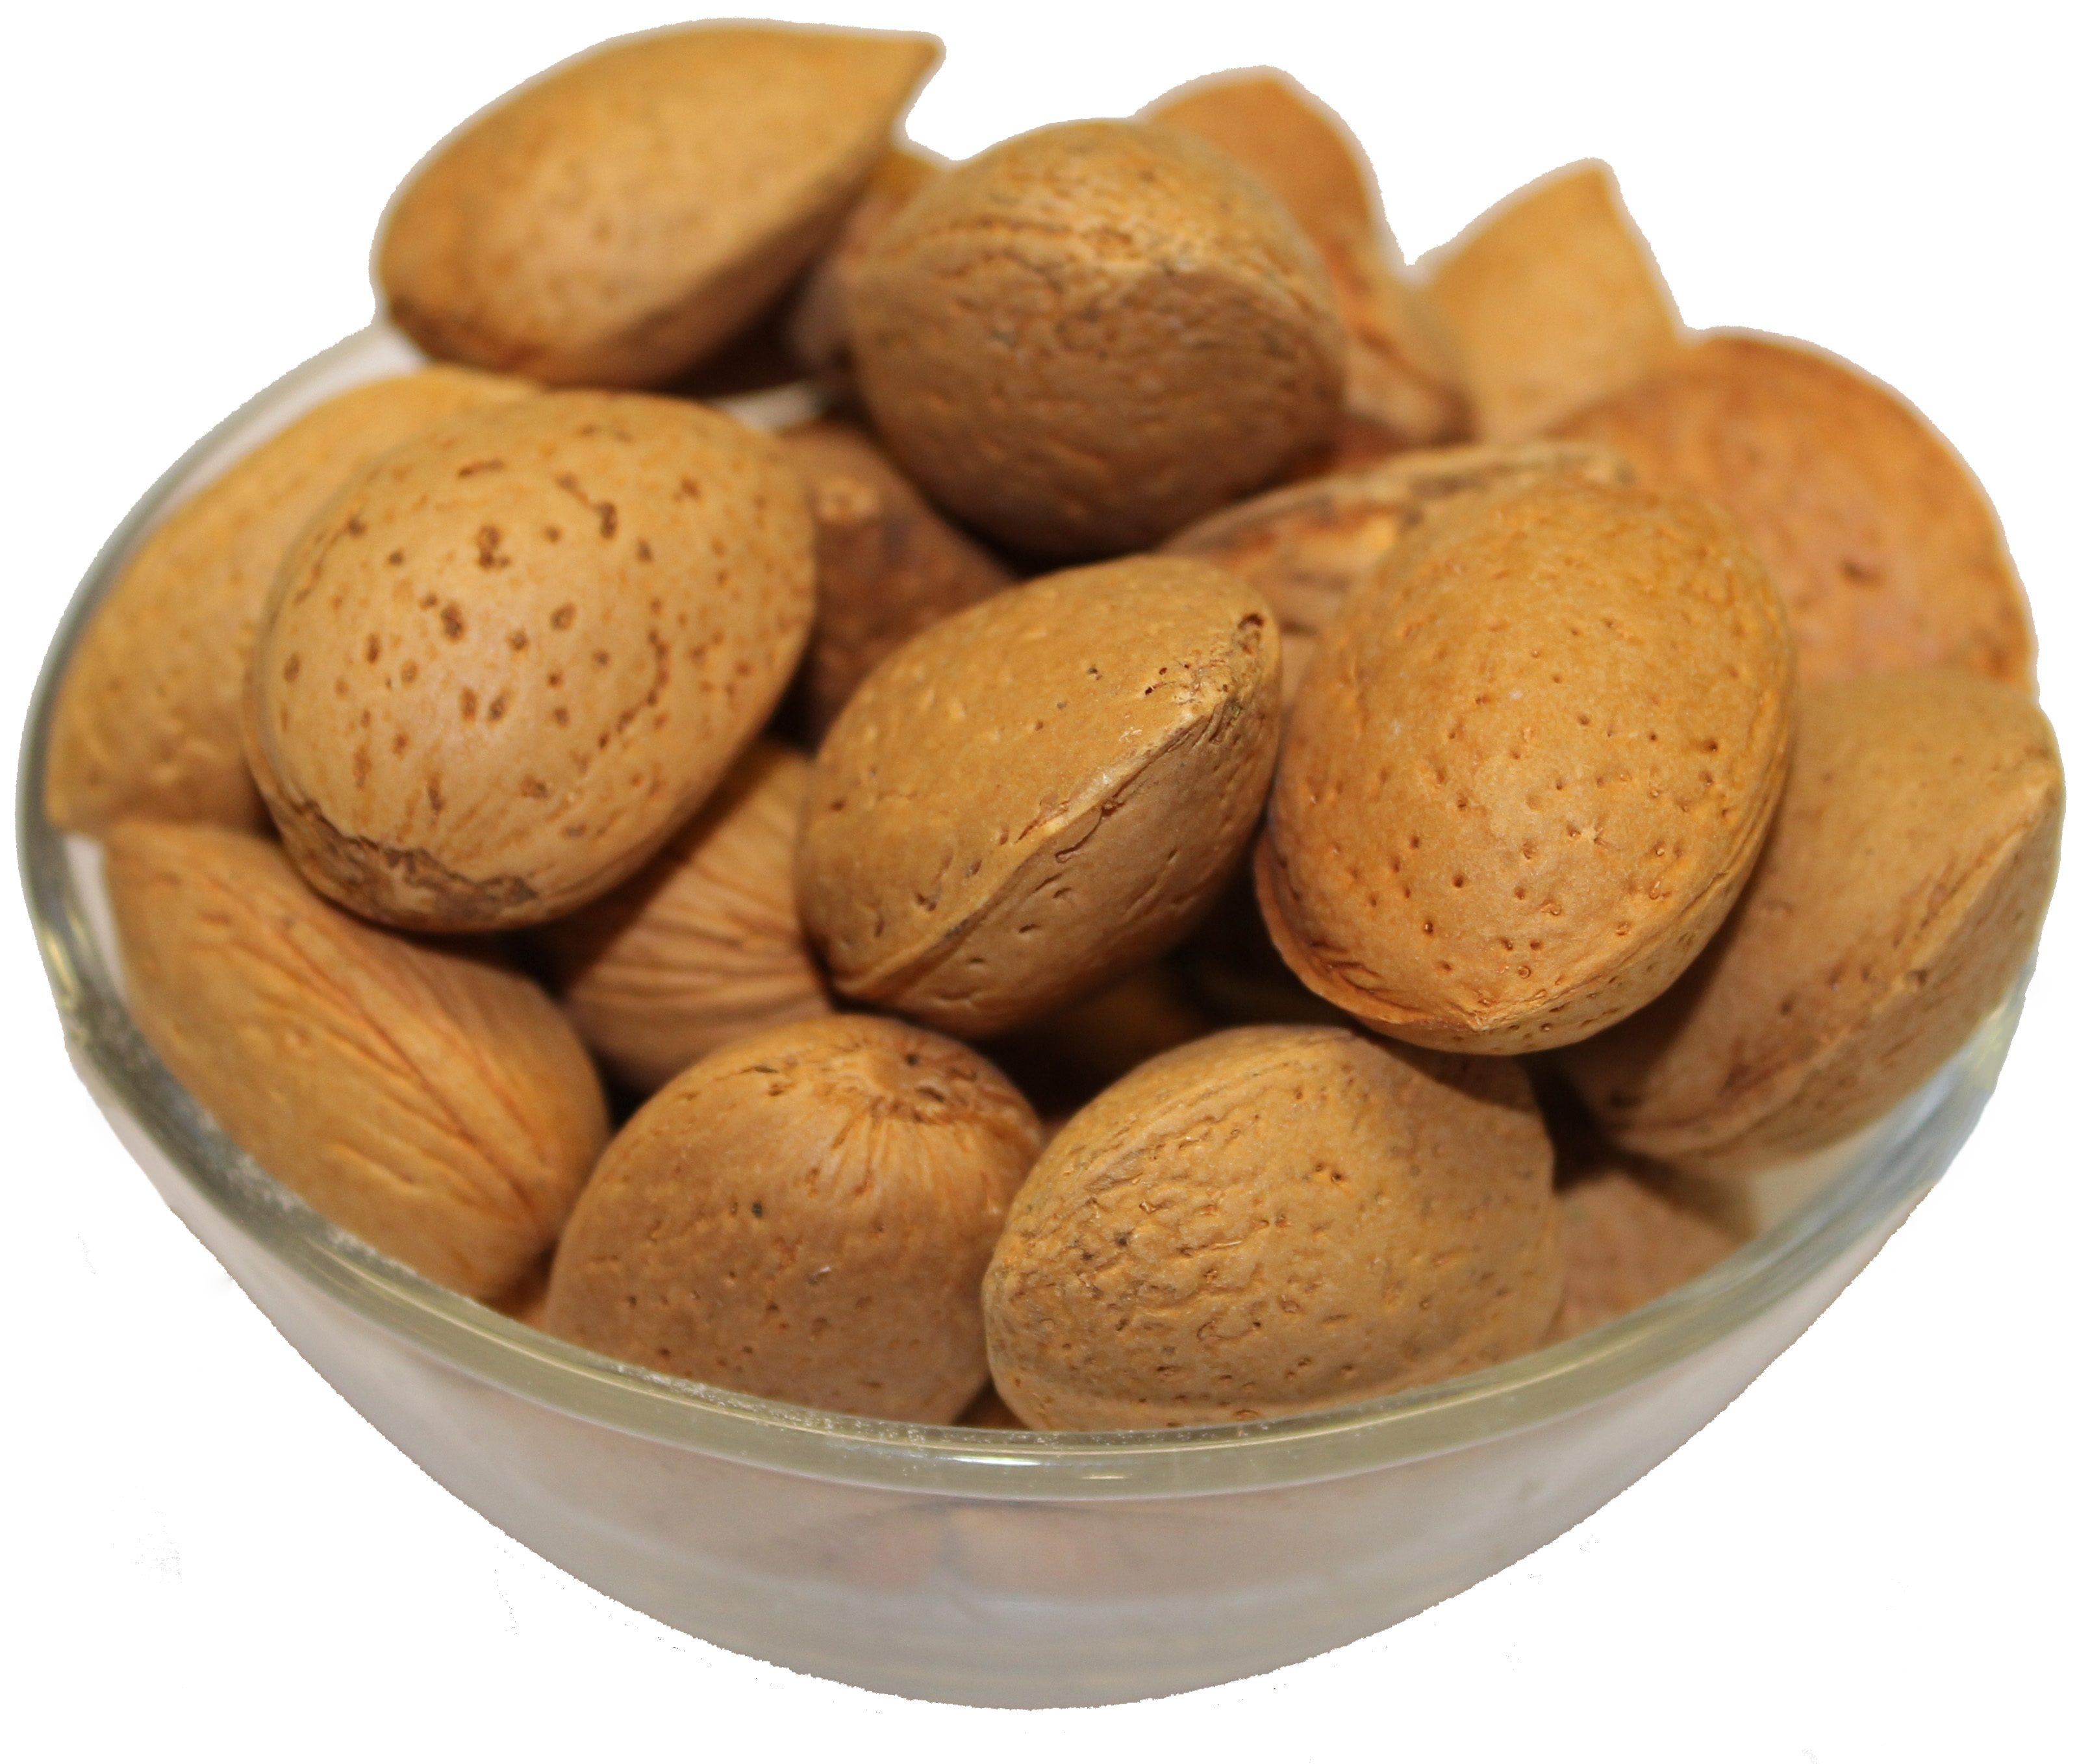 buy almonds in shell in bulk